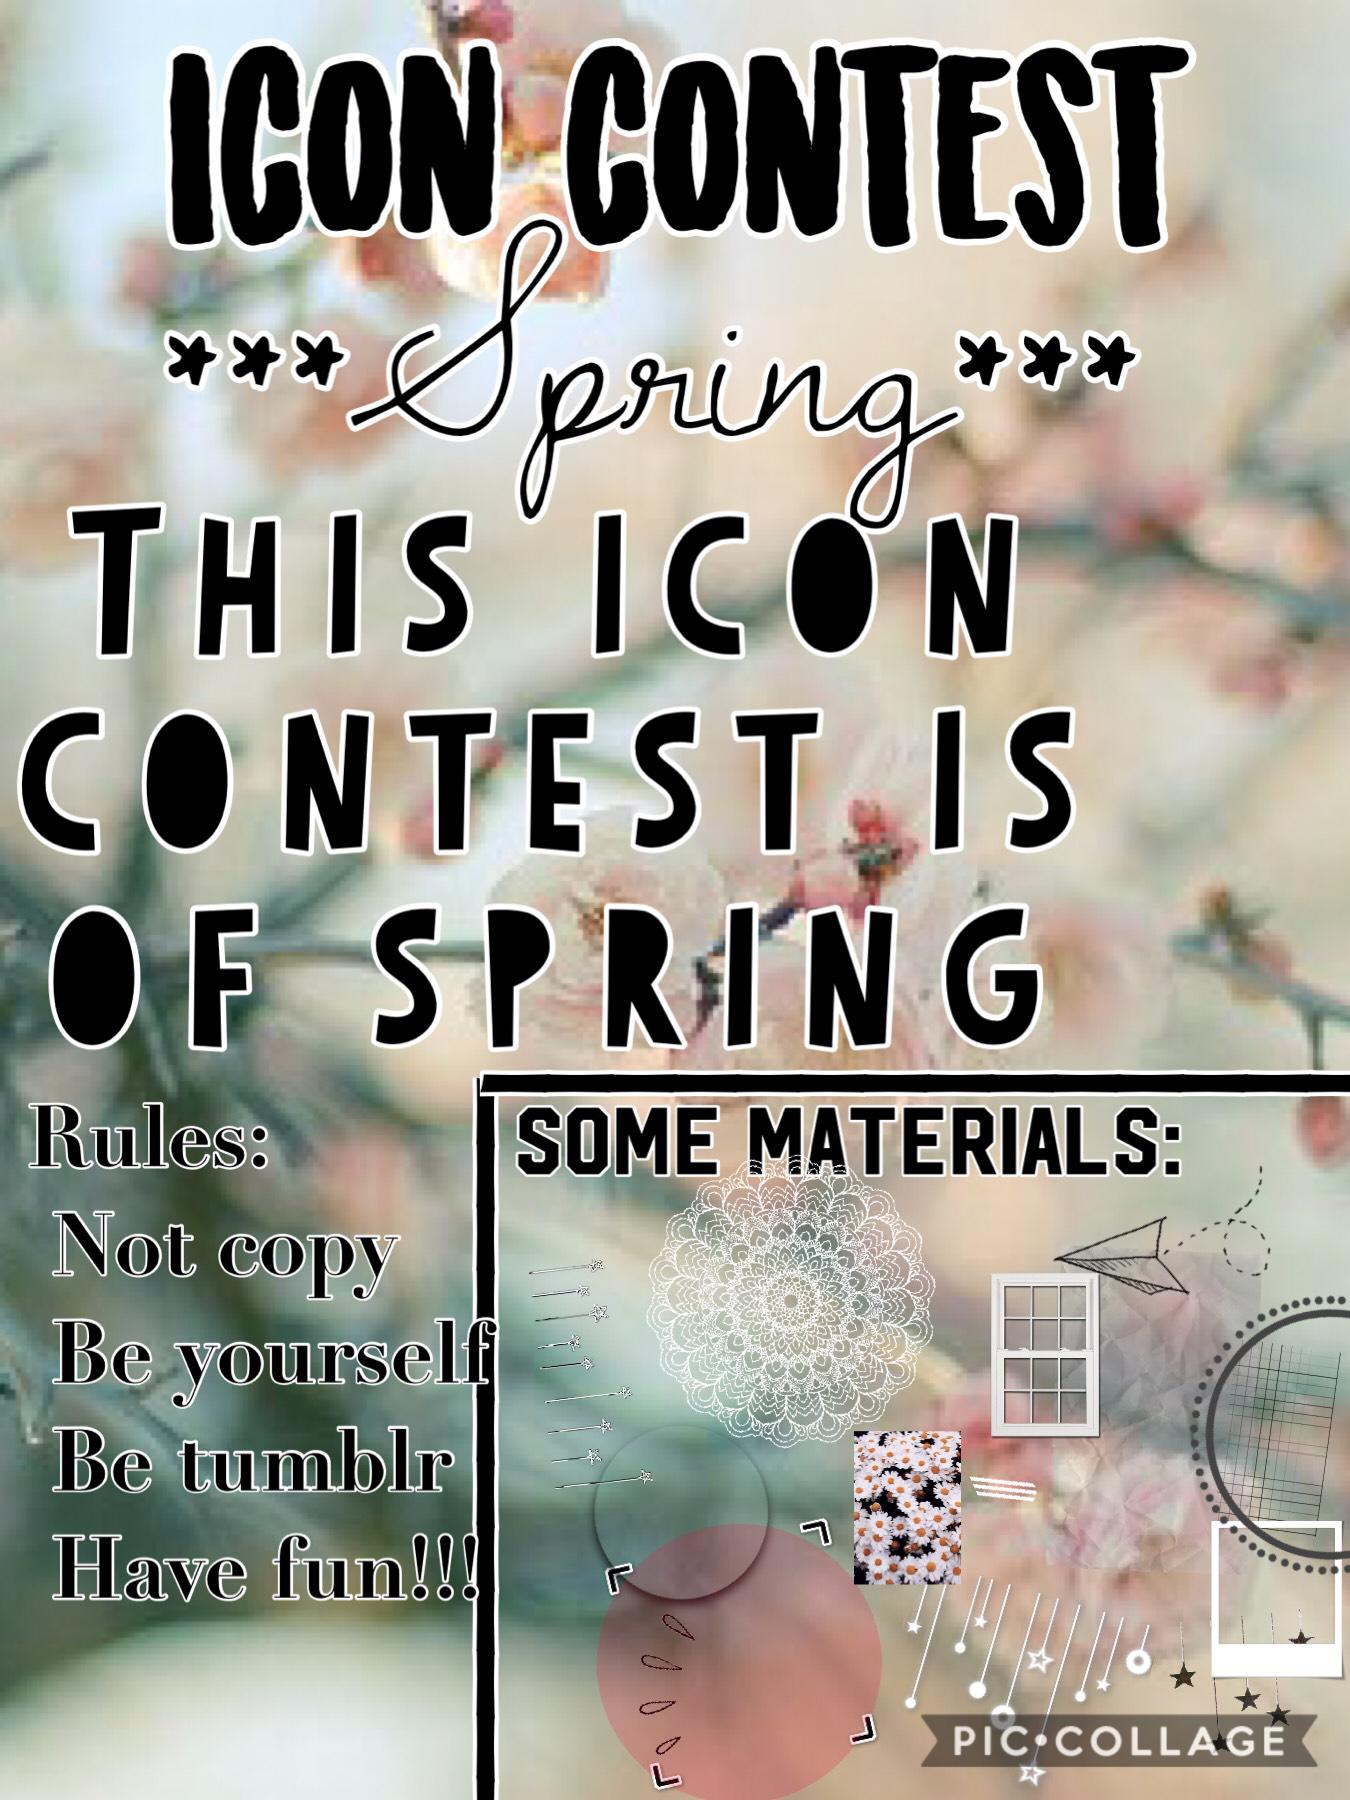 #Spring #IconContest #HaveFun #BeYourself #Tumblr